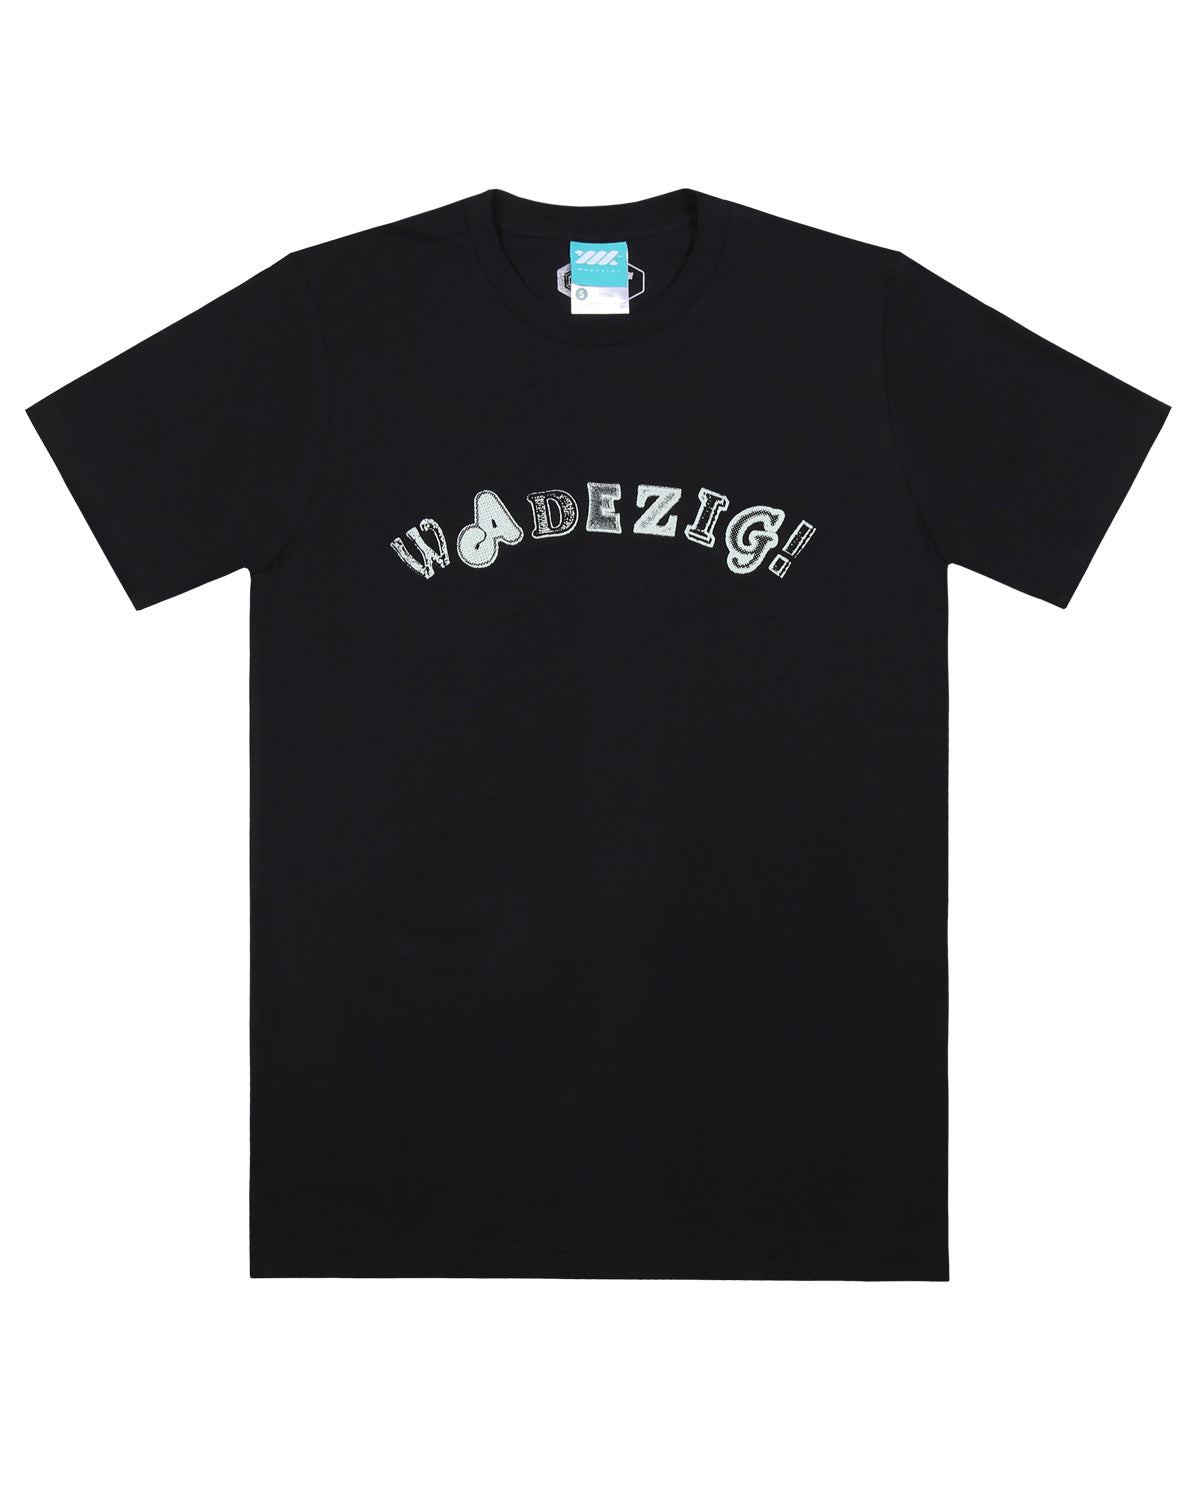 Wadezig! T-Shirt -Ransom Black Tees